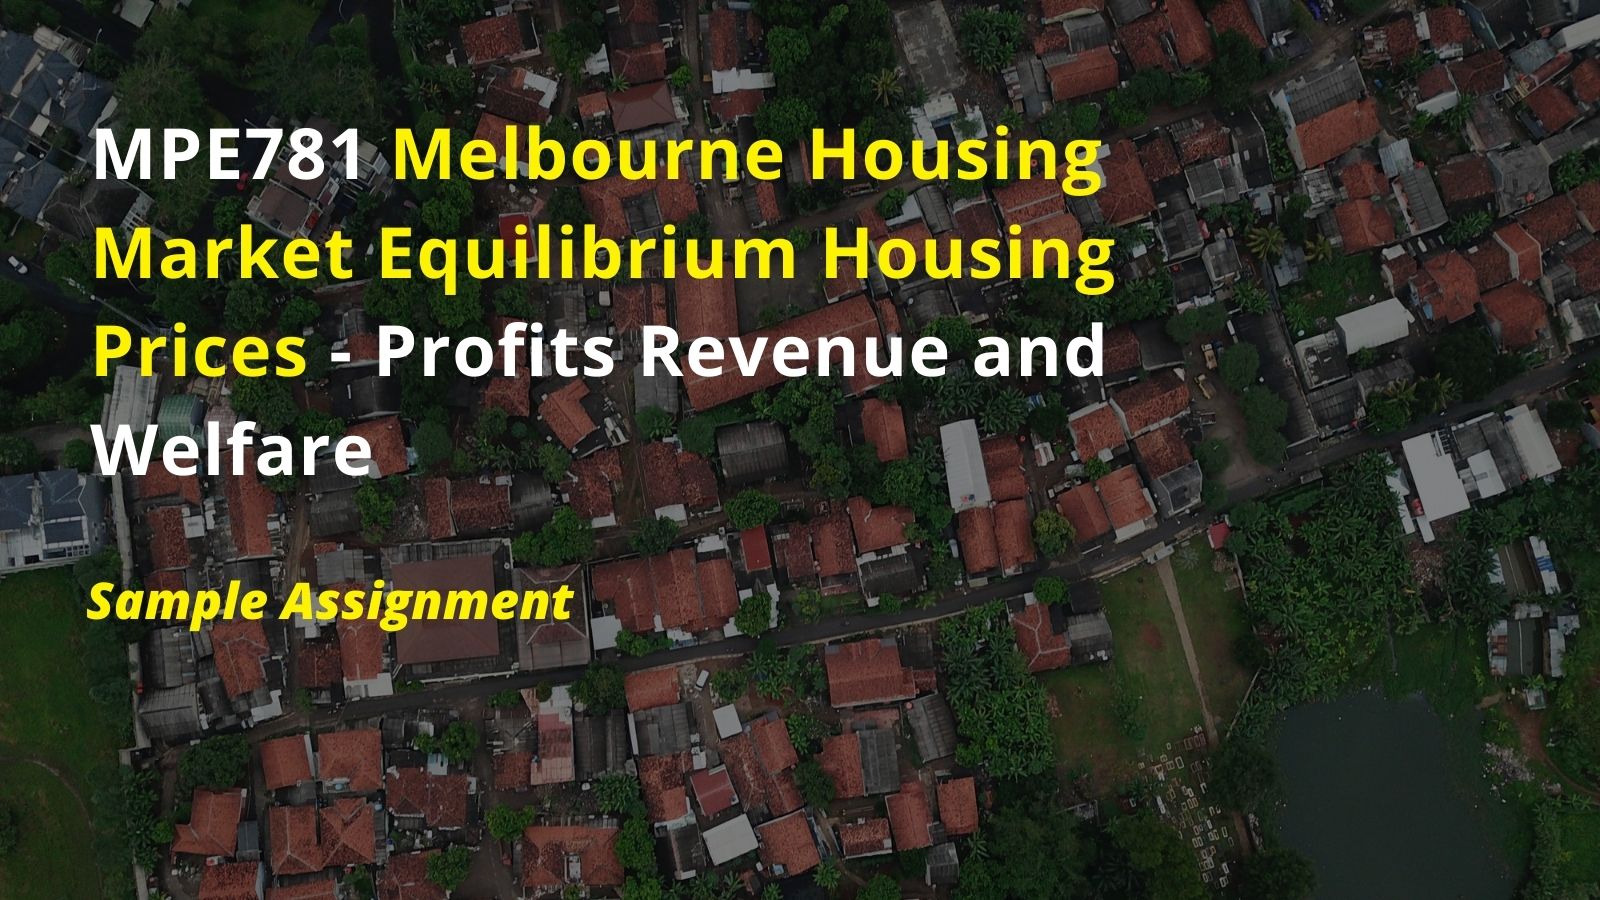 MPE781 Melbourne Housing Market Equilibrium Housing Prices